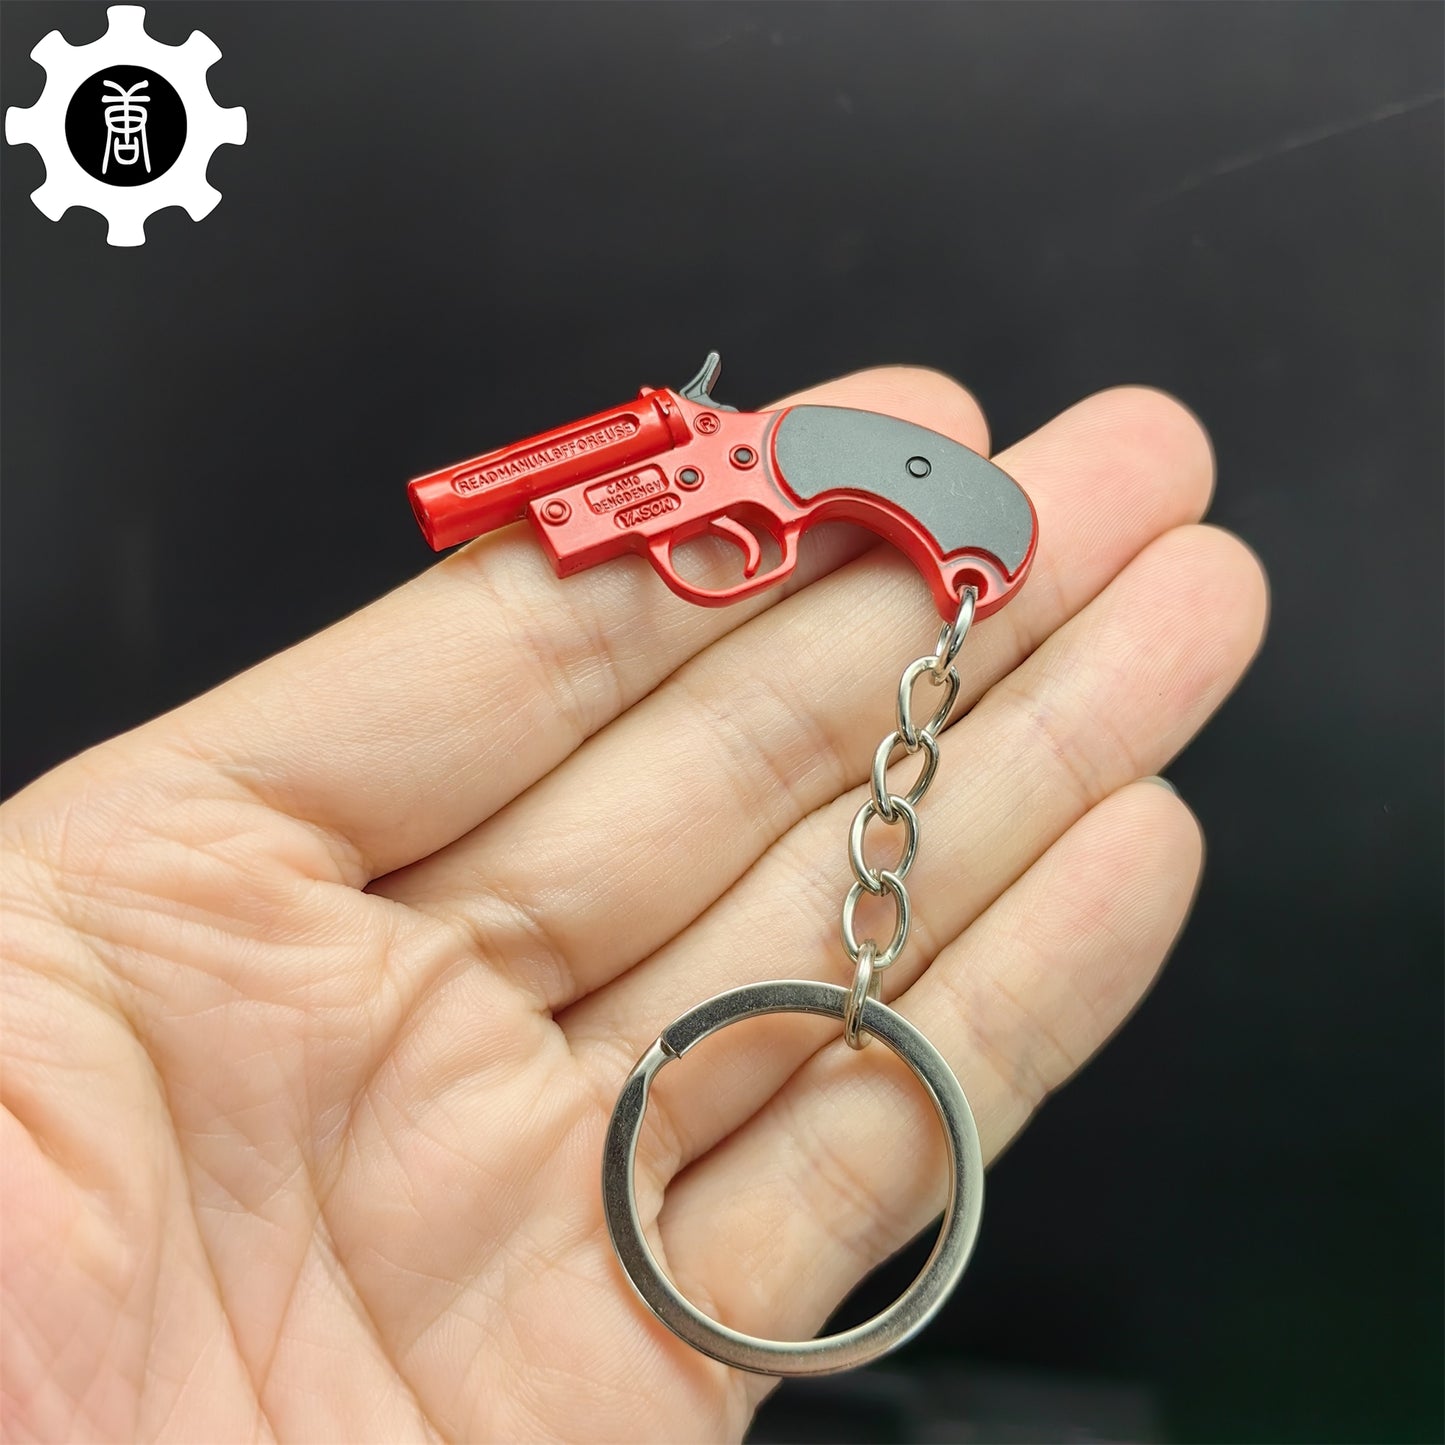 Mini SAIPH Flare Gun Metal Keychain